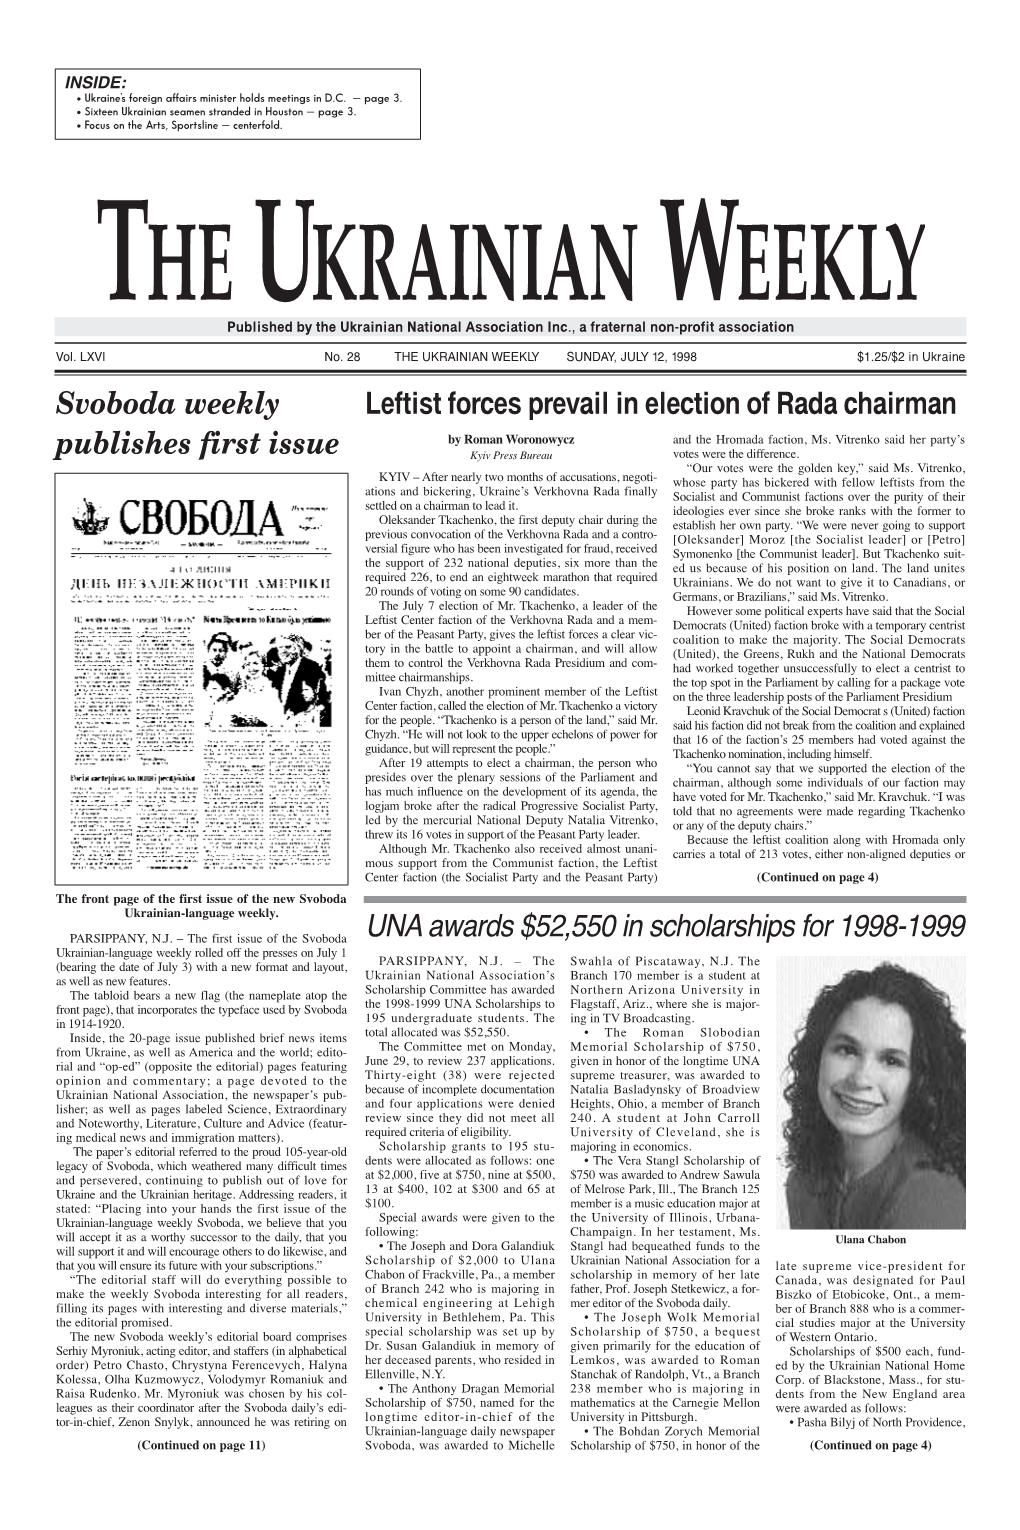 The Ukrainian Weekly 1998, No.28